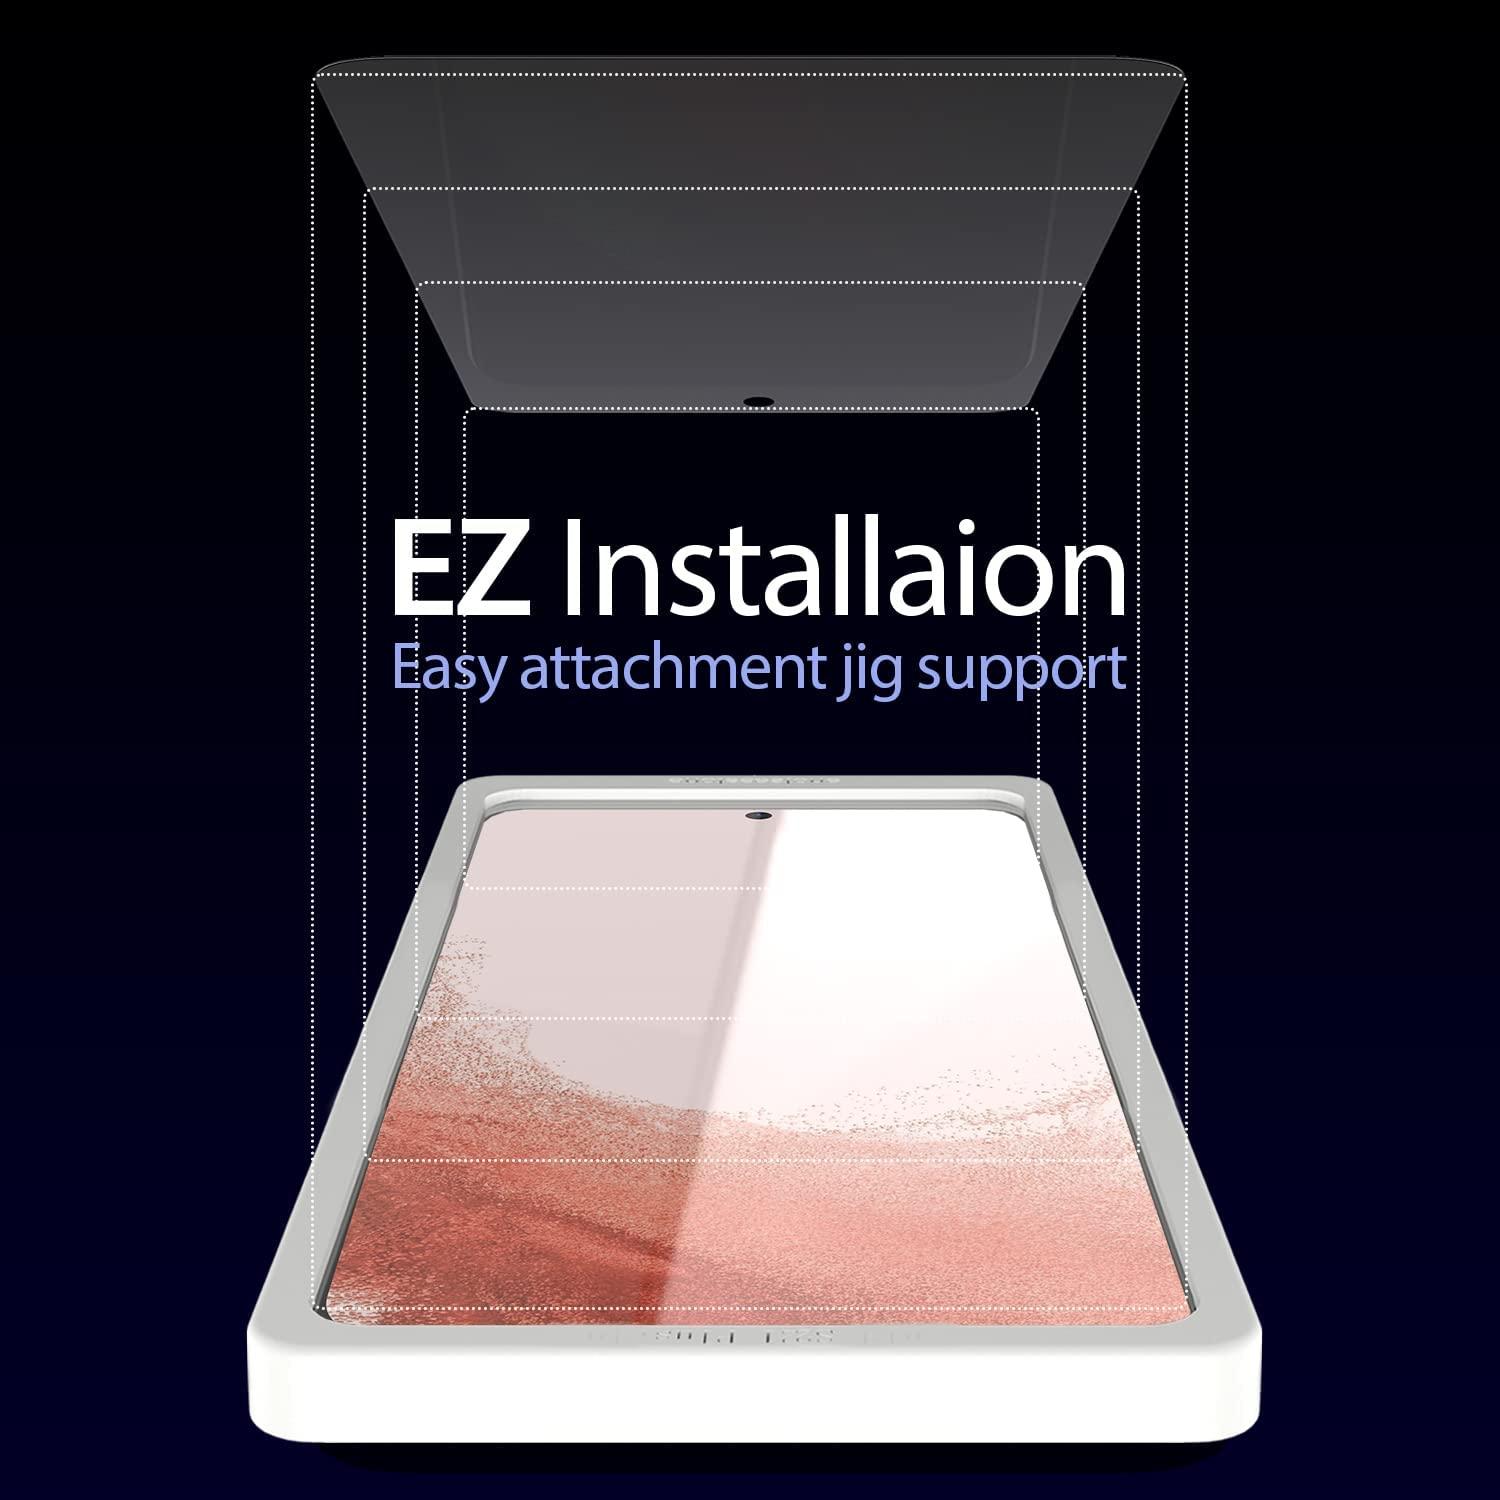 Whitestone™ Dome Glass® (x2.Pack) EZ 8809365406548 Samsung Galaxy S22 Premium Tempered Glass Screen Protector